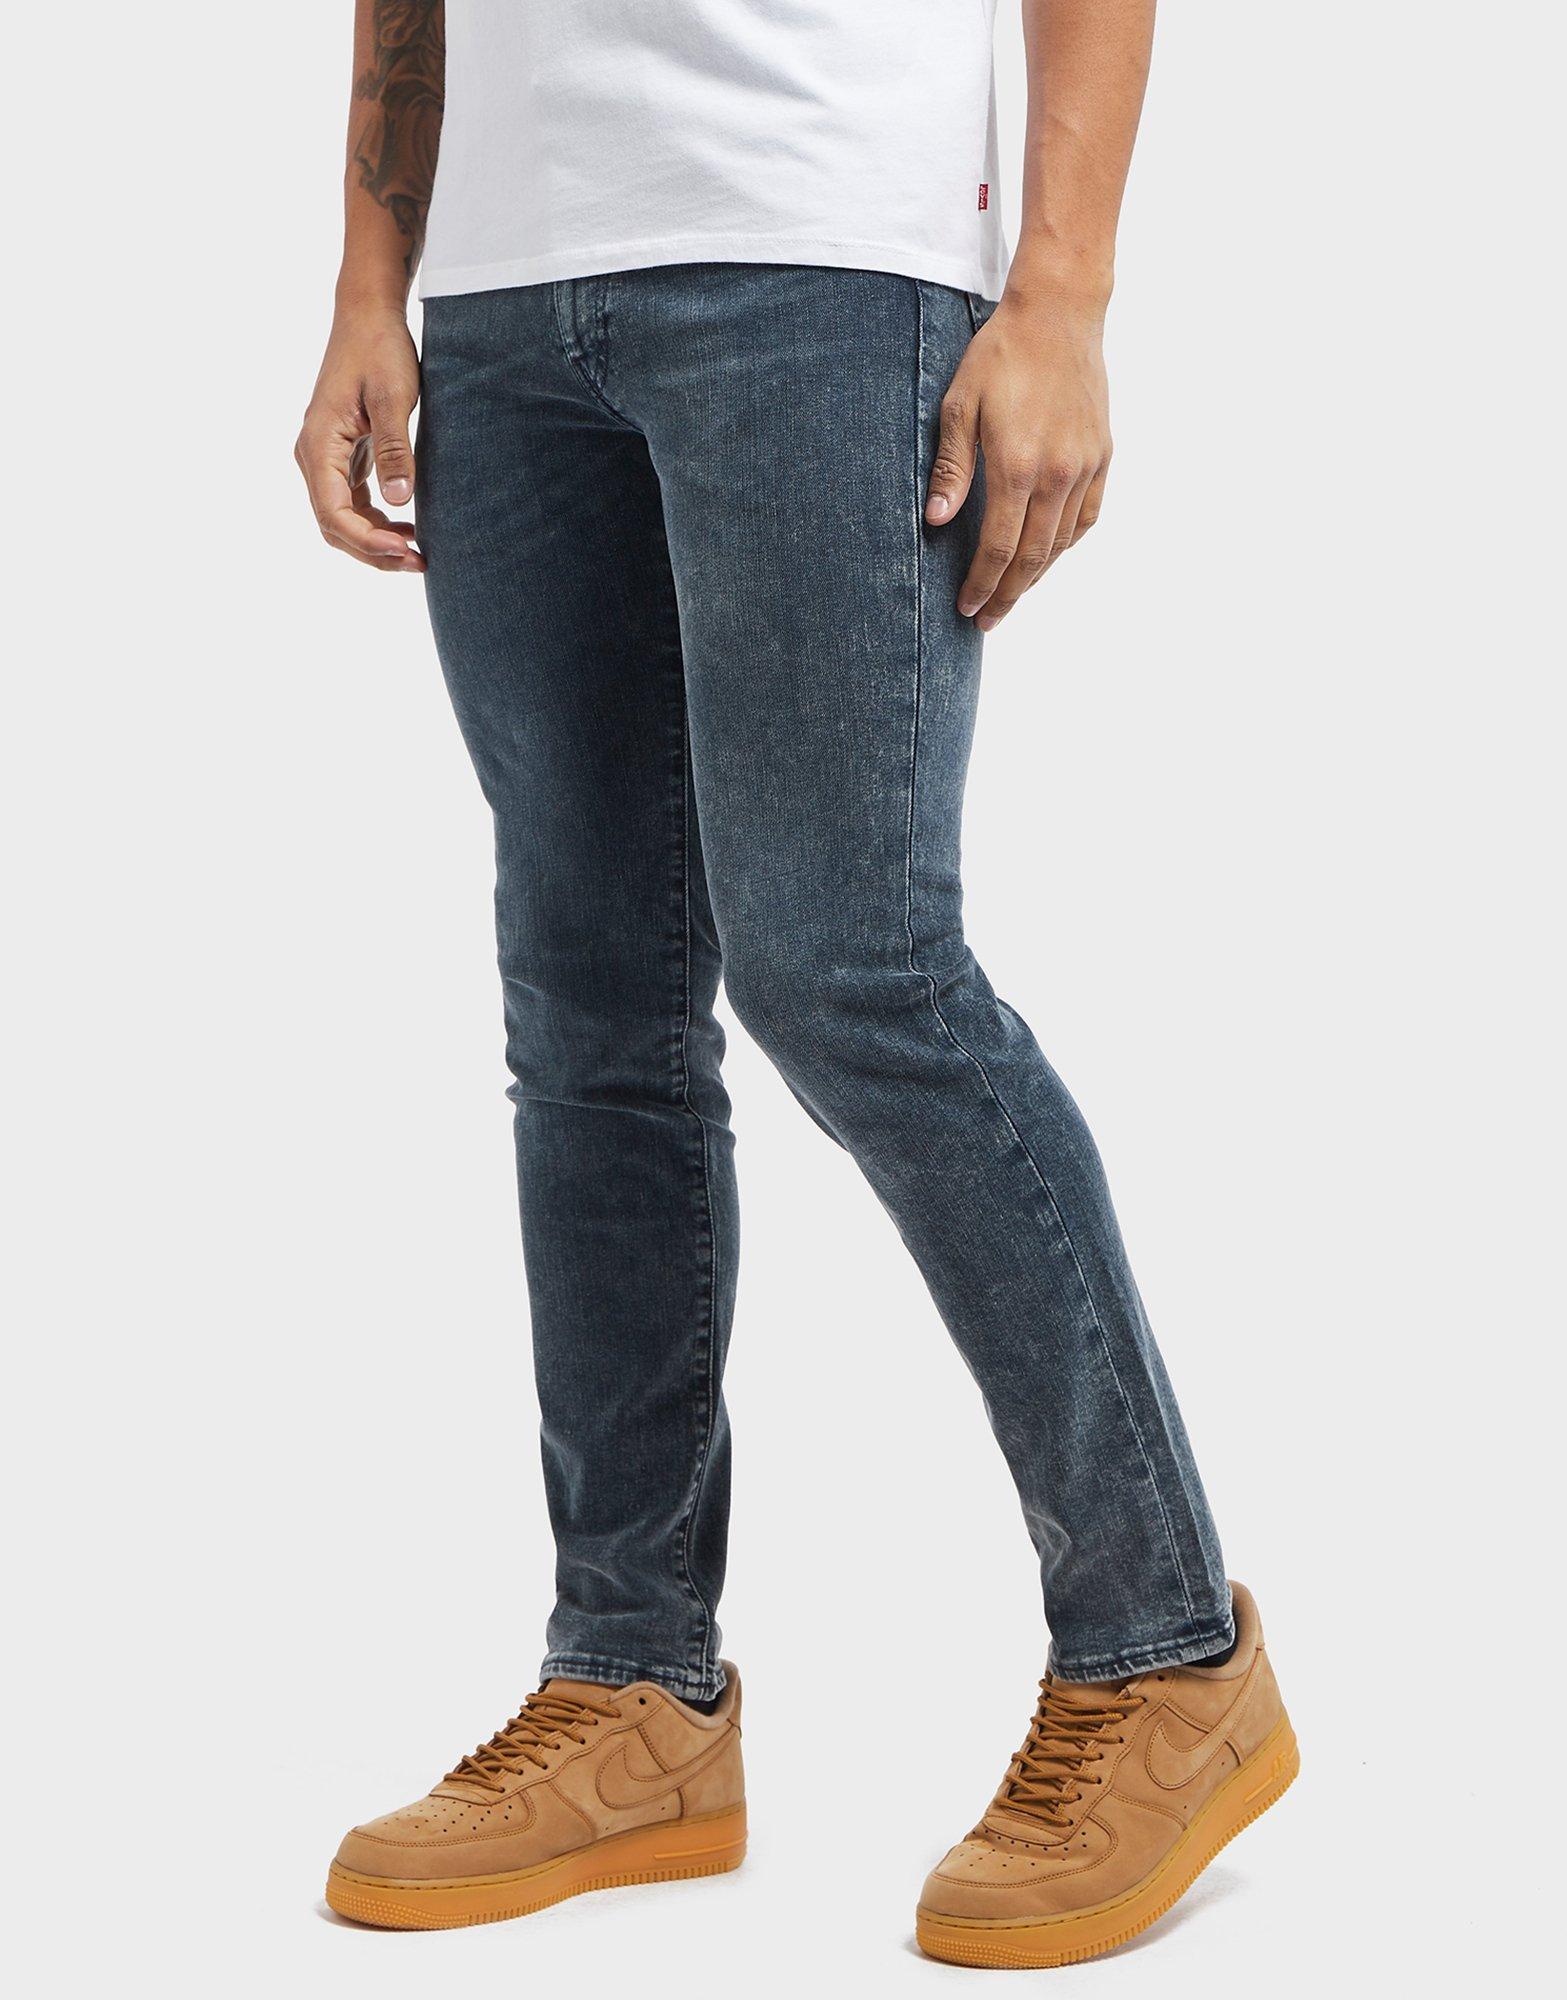 levi's 511 slim advanced stretch jeans